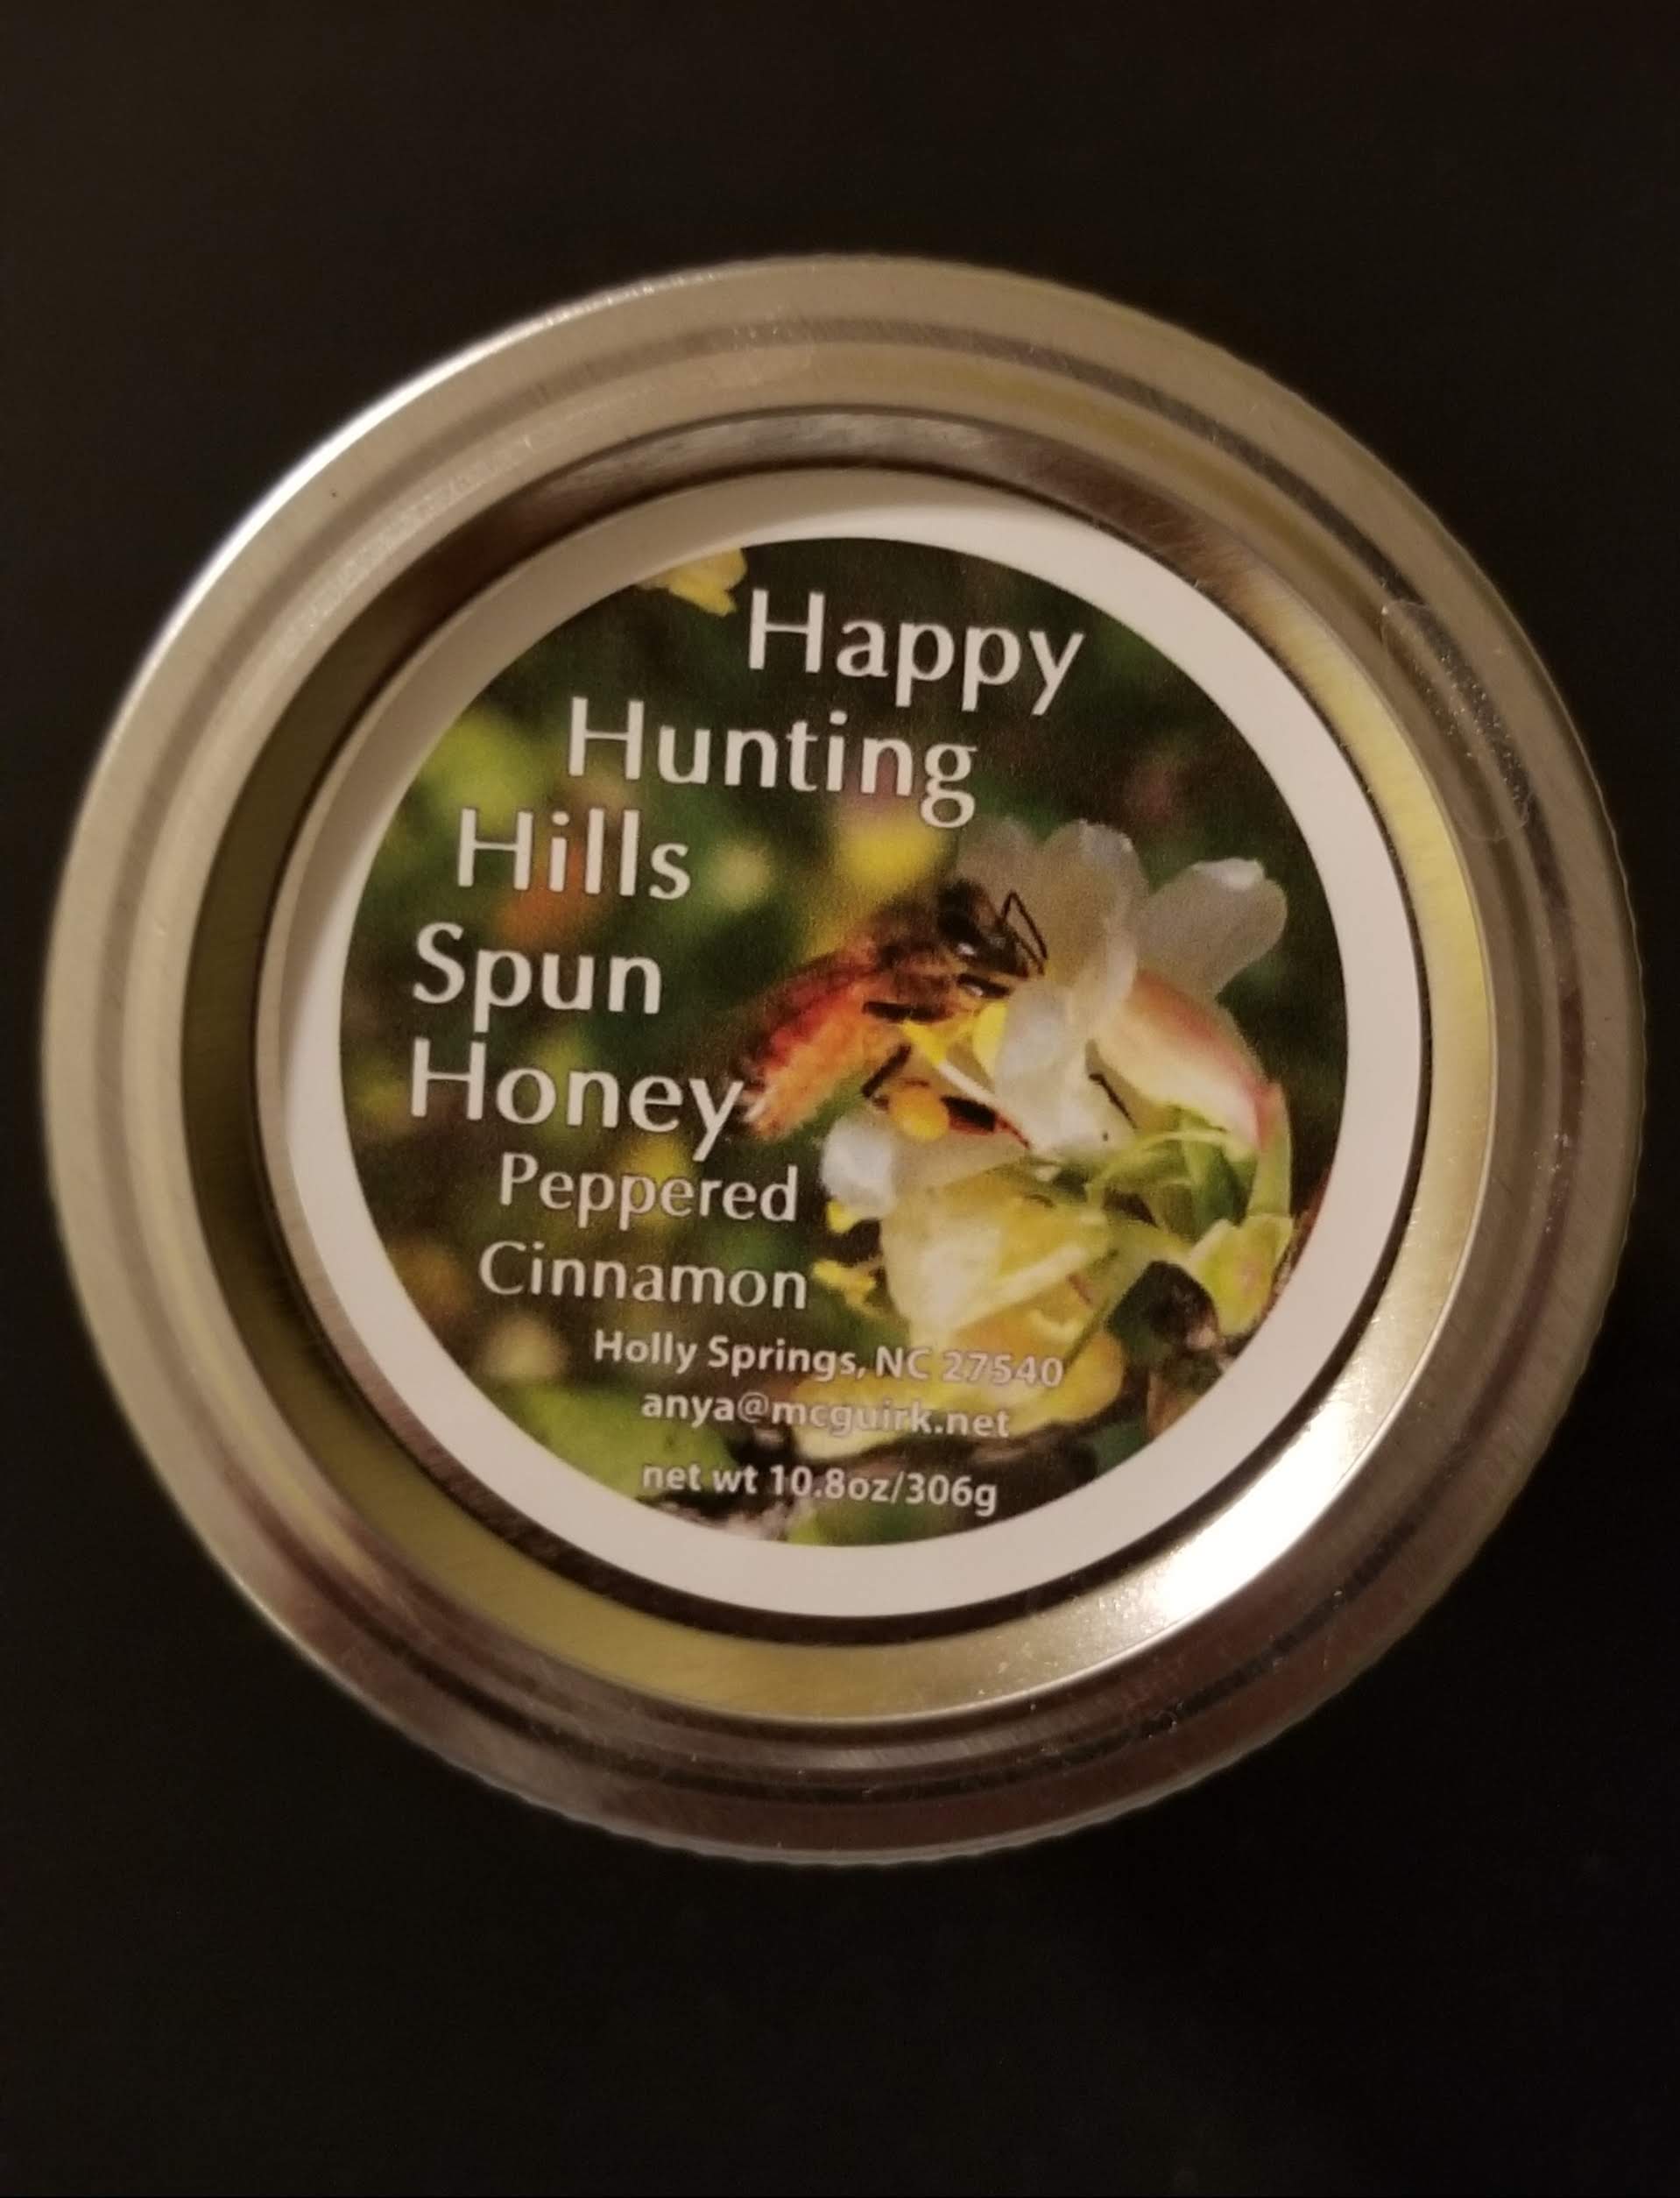 10.8 oz. Peppered Cinnamon Spun Honey